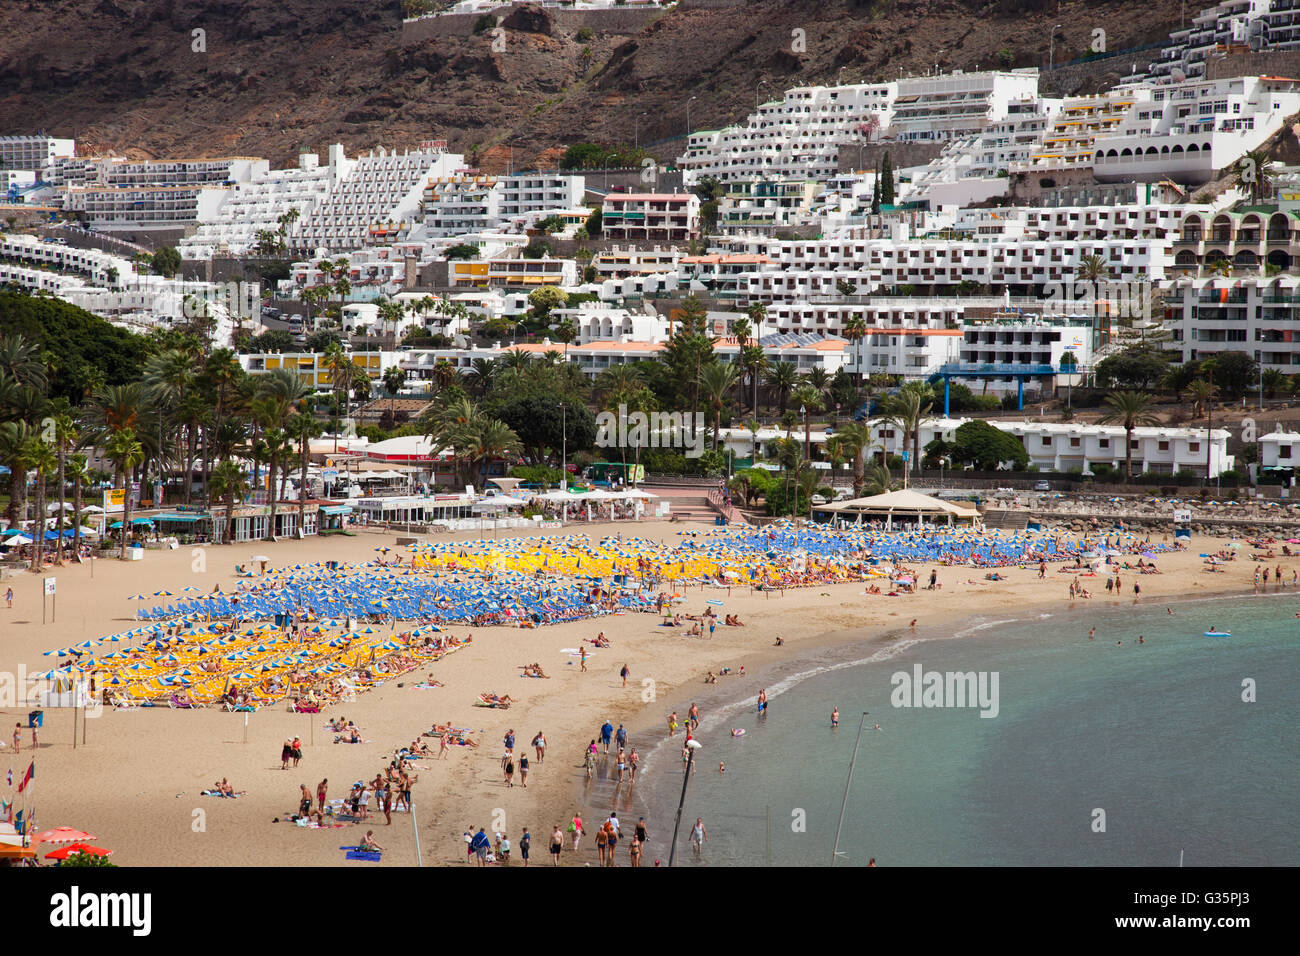 Puerto Rico, Gran Canaria island, Canary archipelago, Spain, Europe Stock Photo